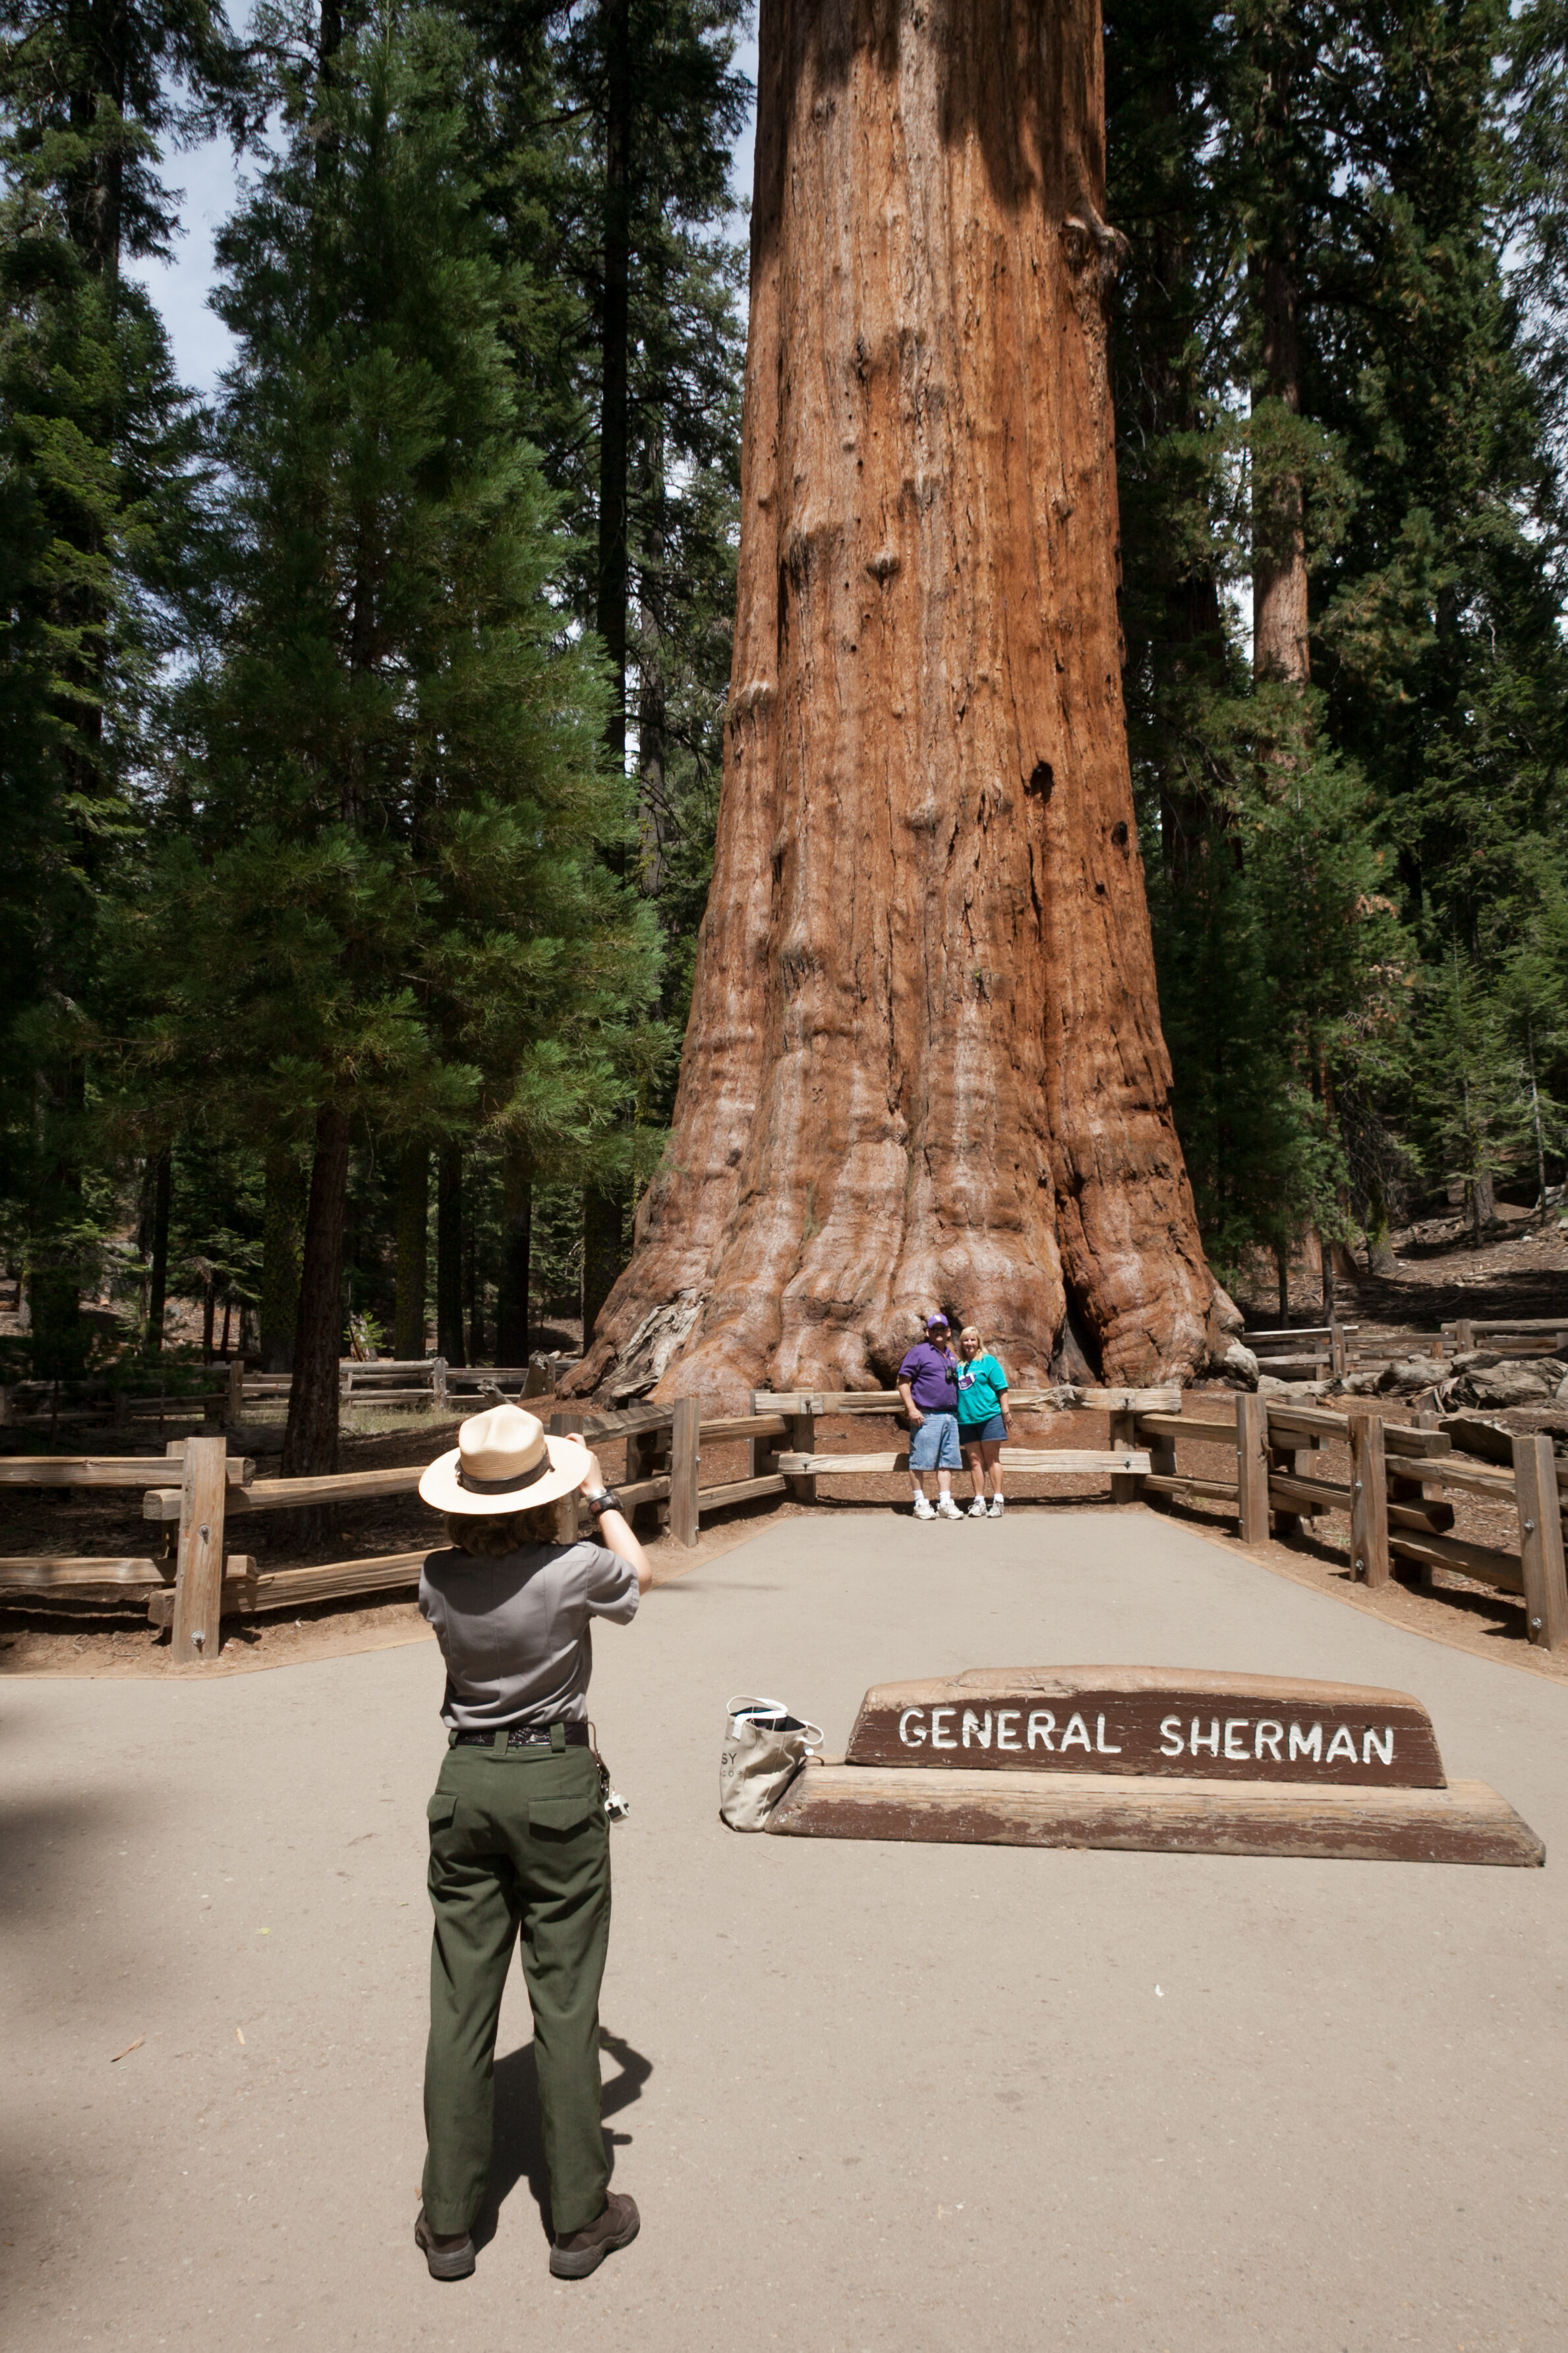  Sequoia National Park 